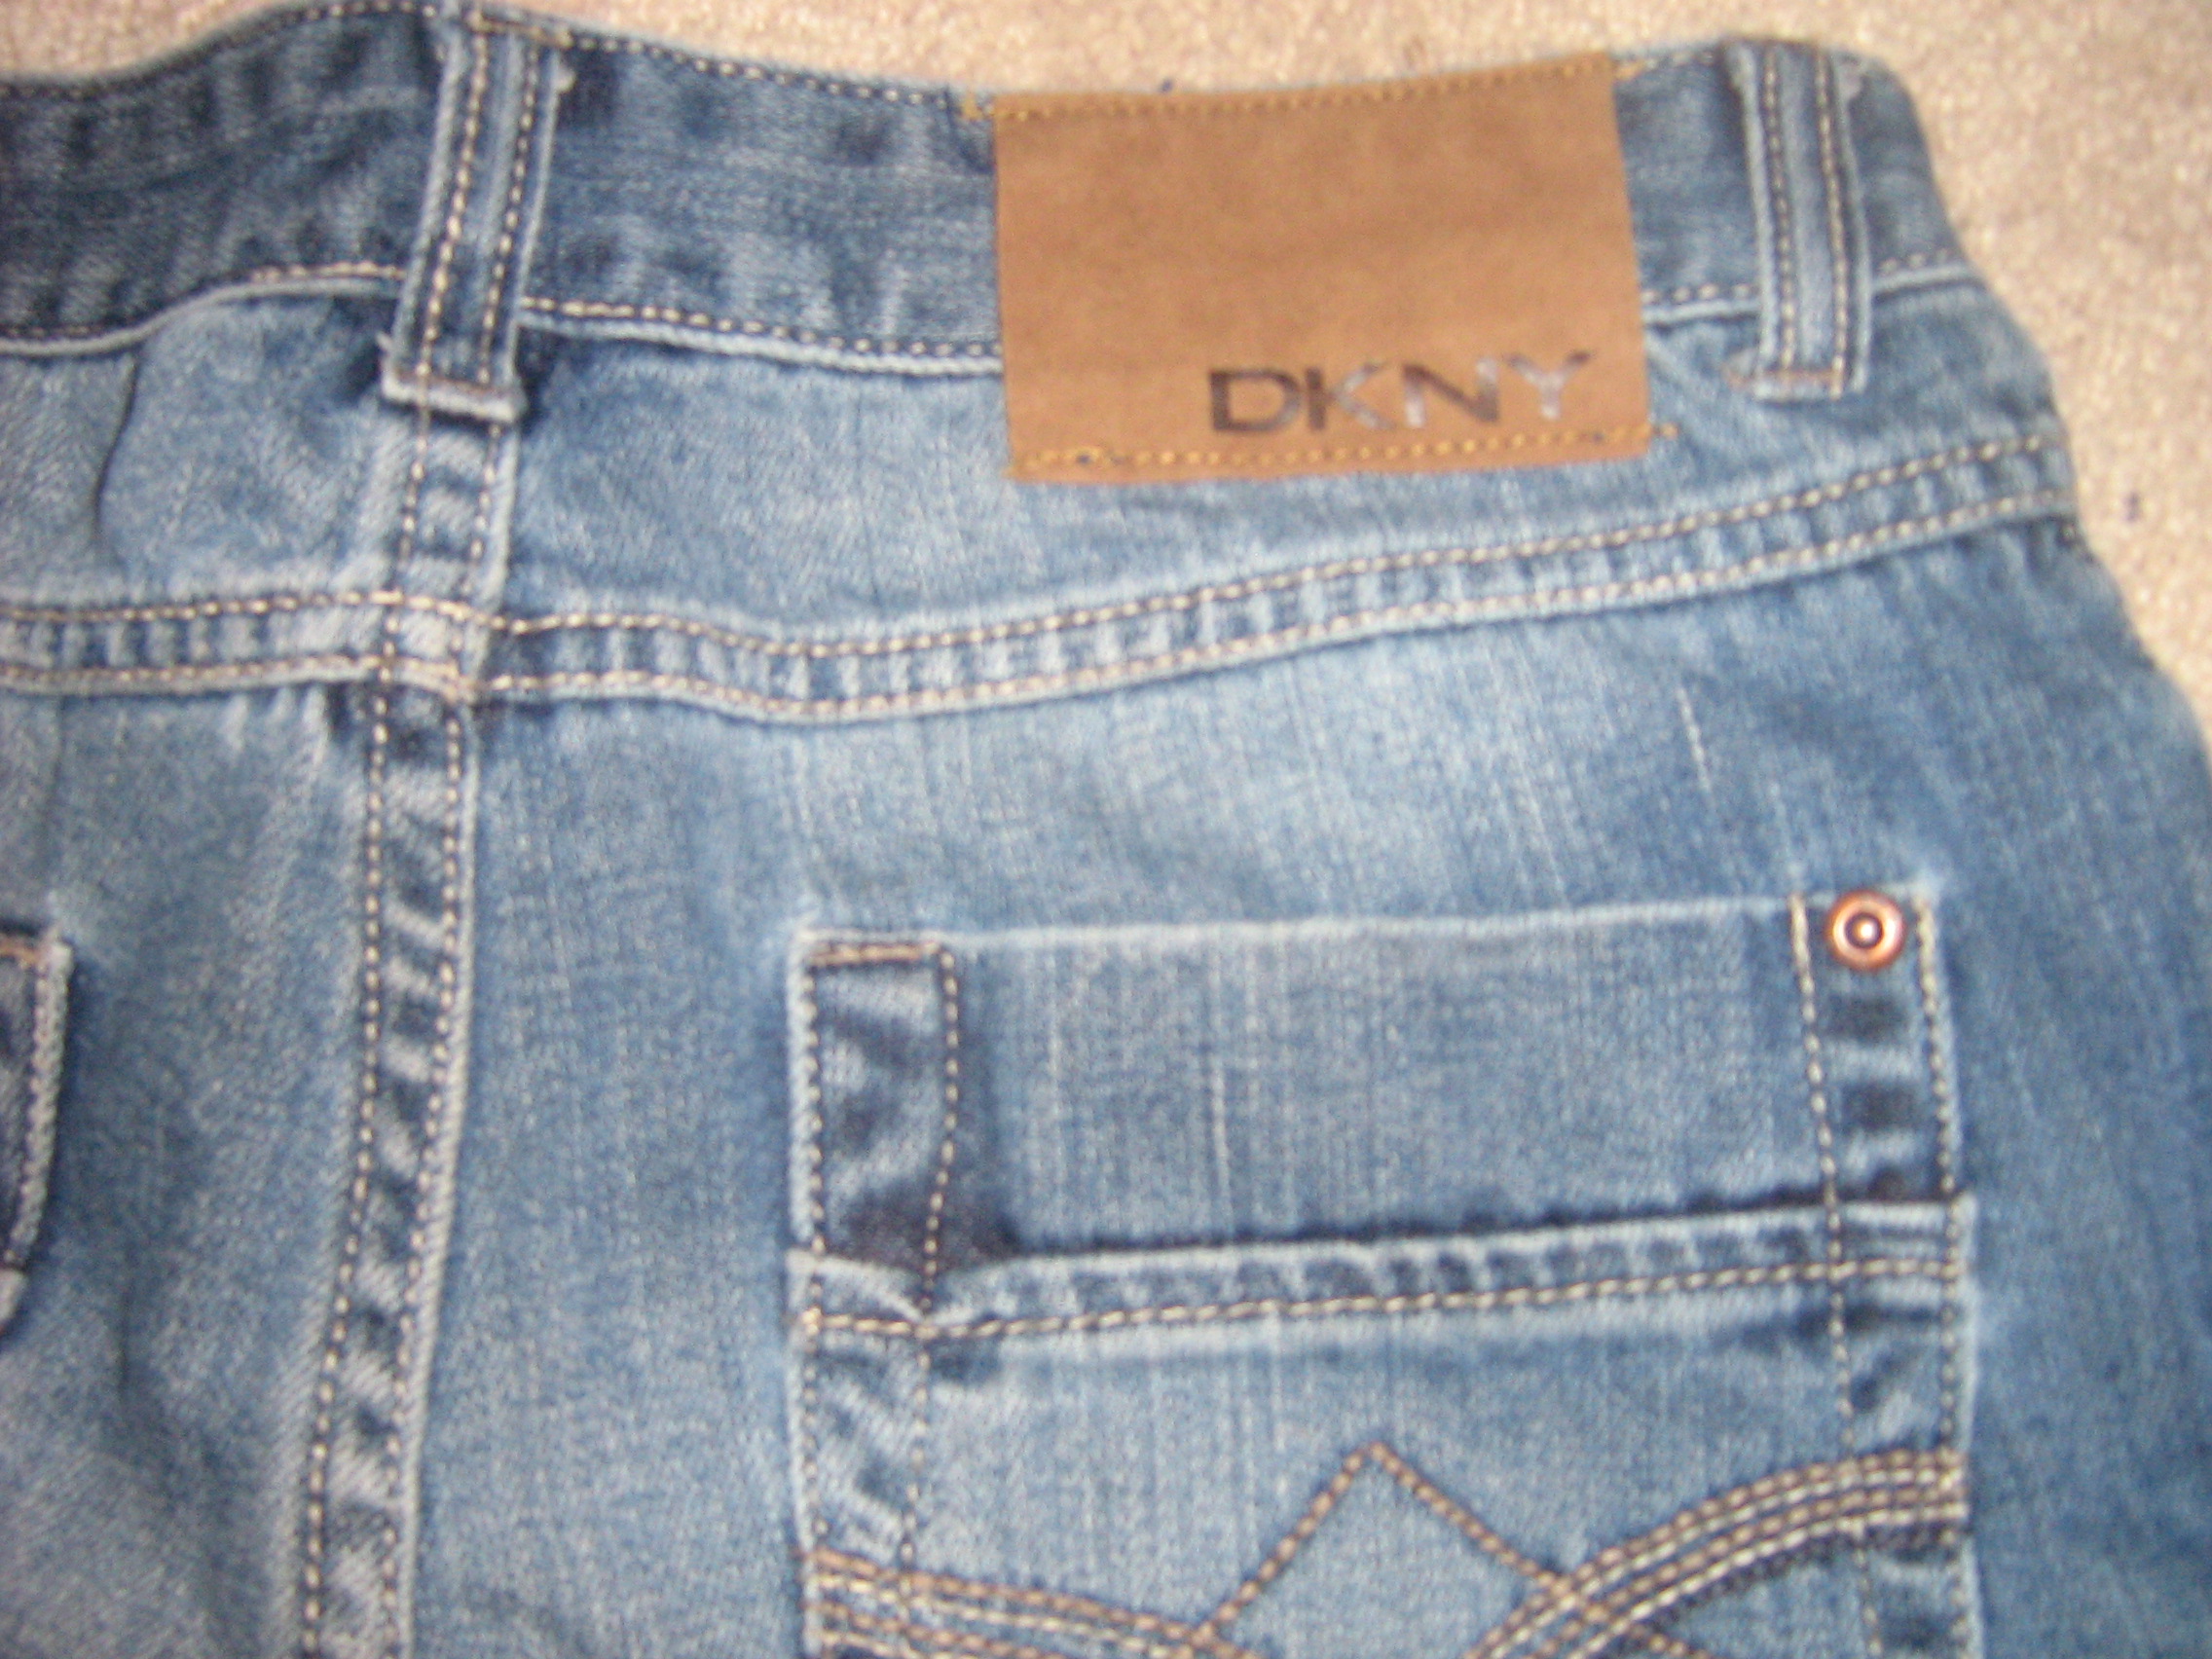 DKNY jeans - Boys size 18